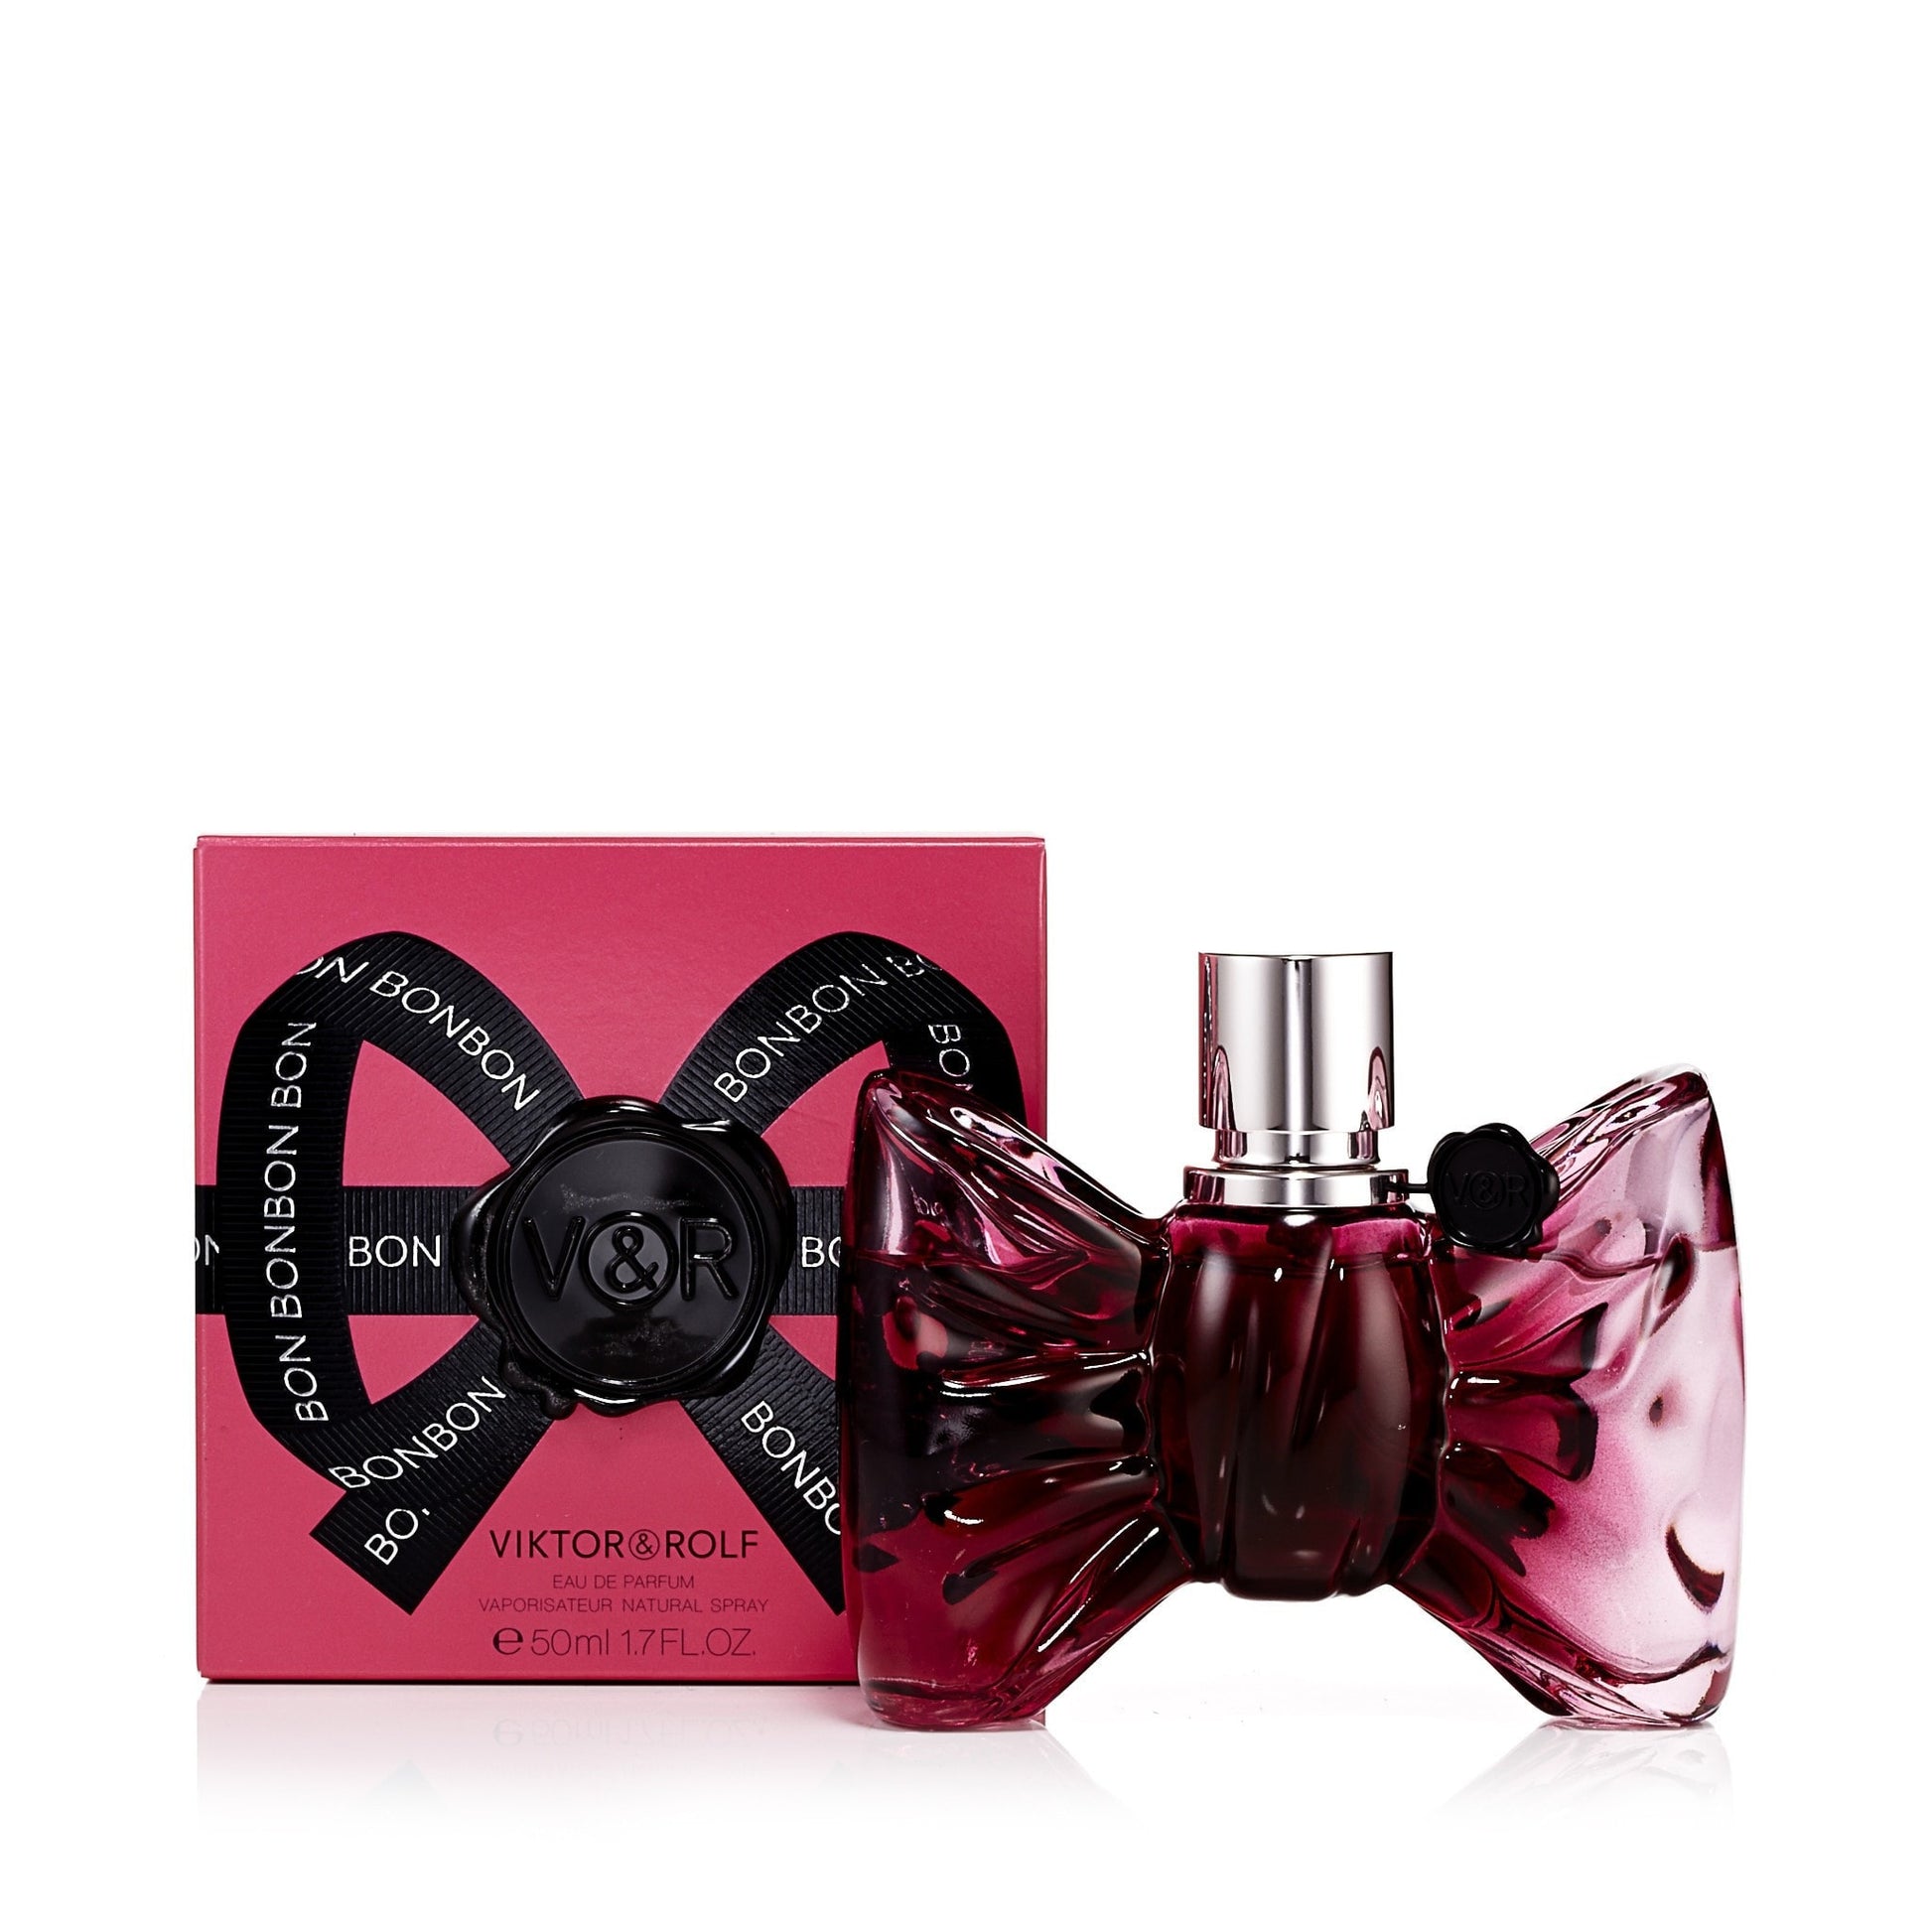 BonBon Eau de Parfum Spray for Women by Viktor & Rolf 1.7 oz. Click to open in modal